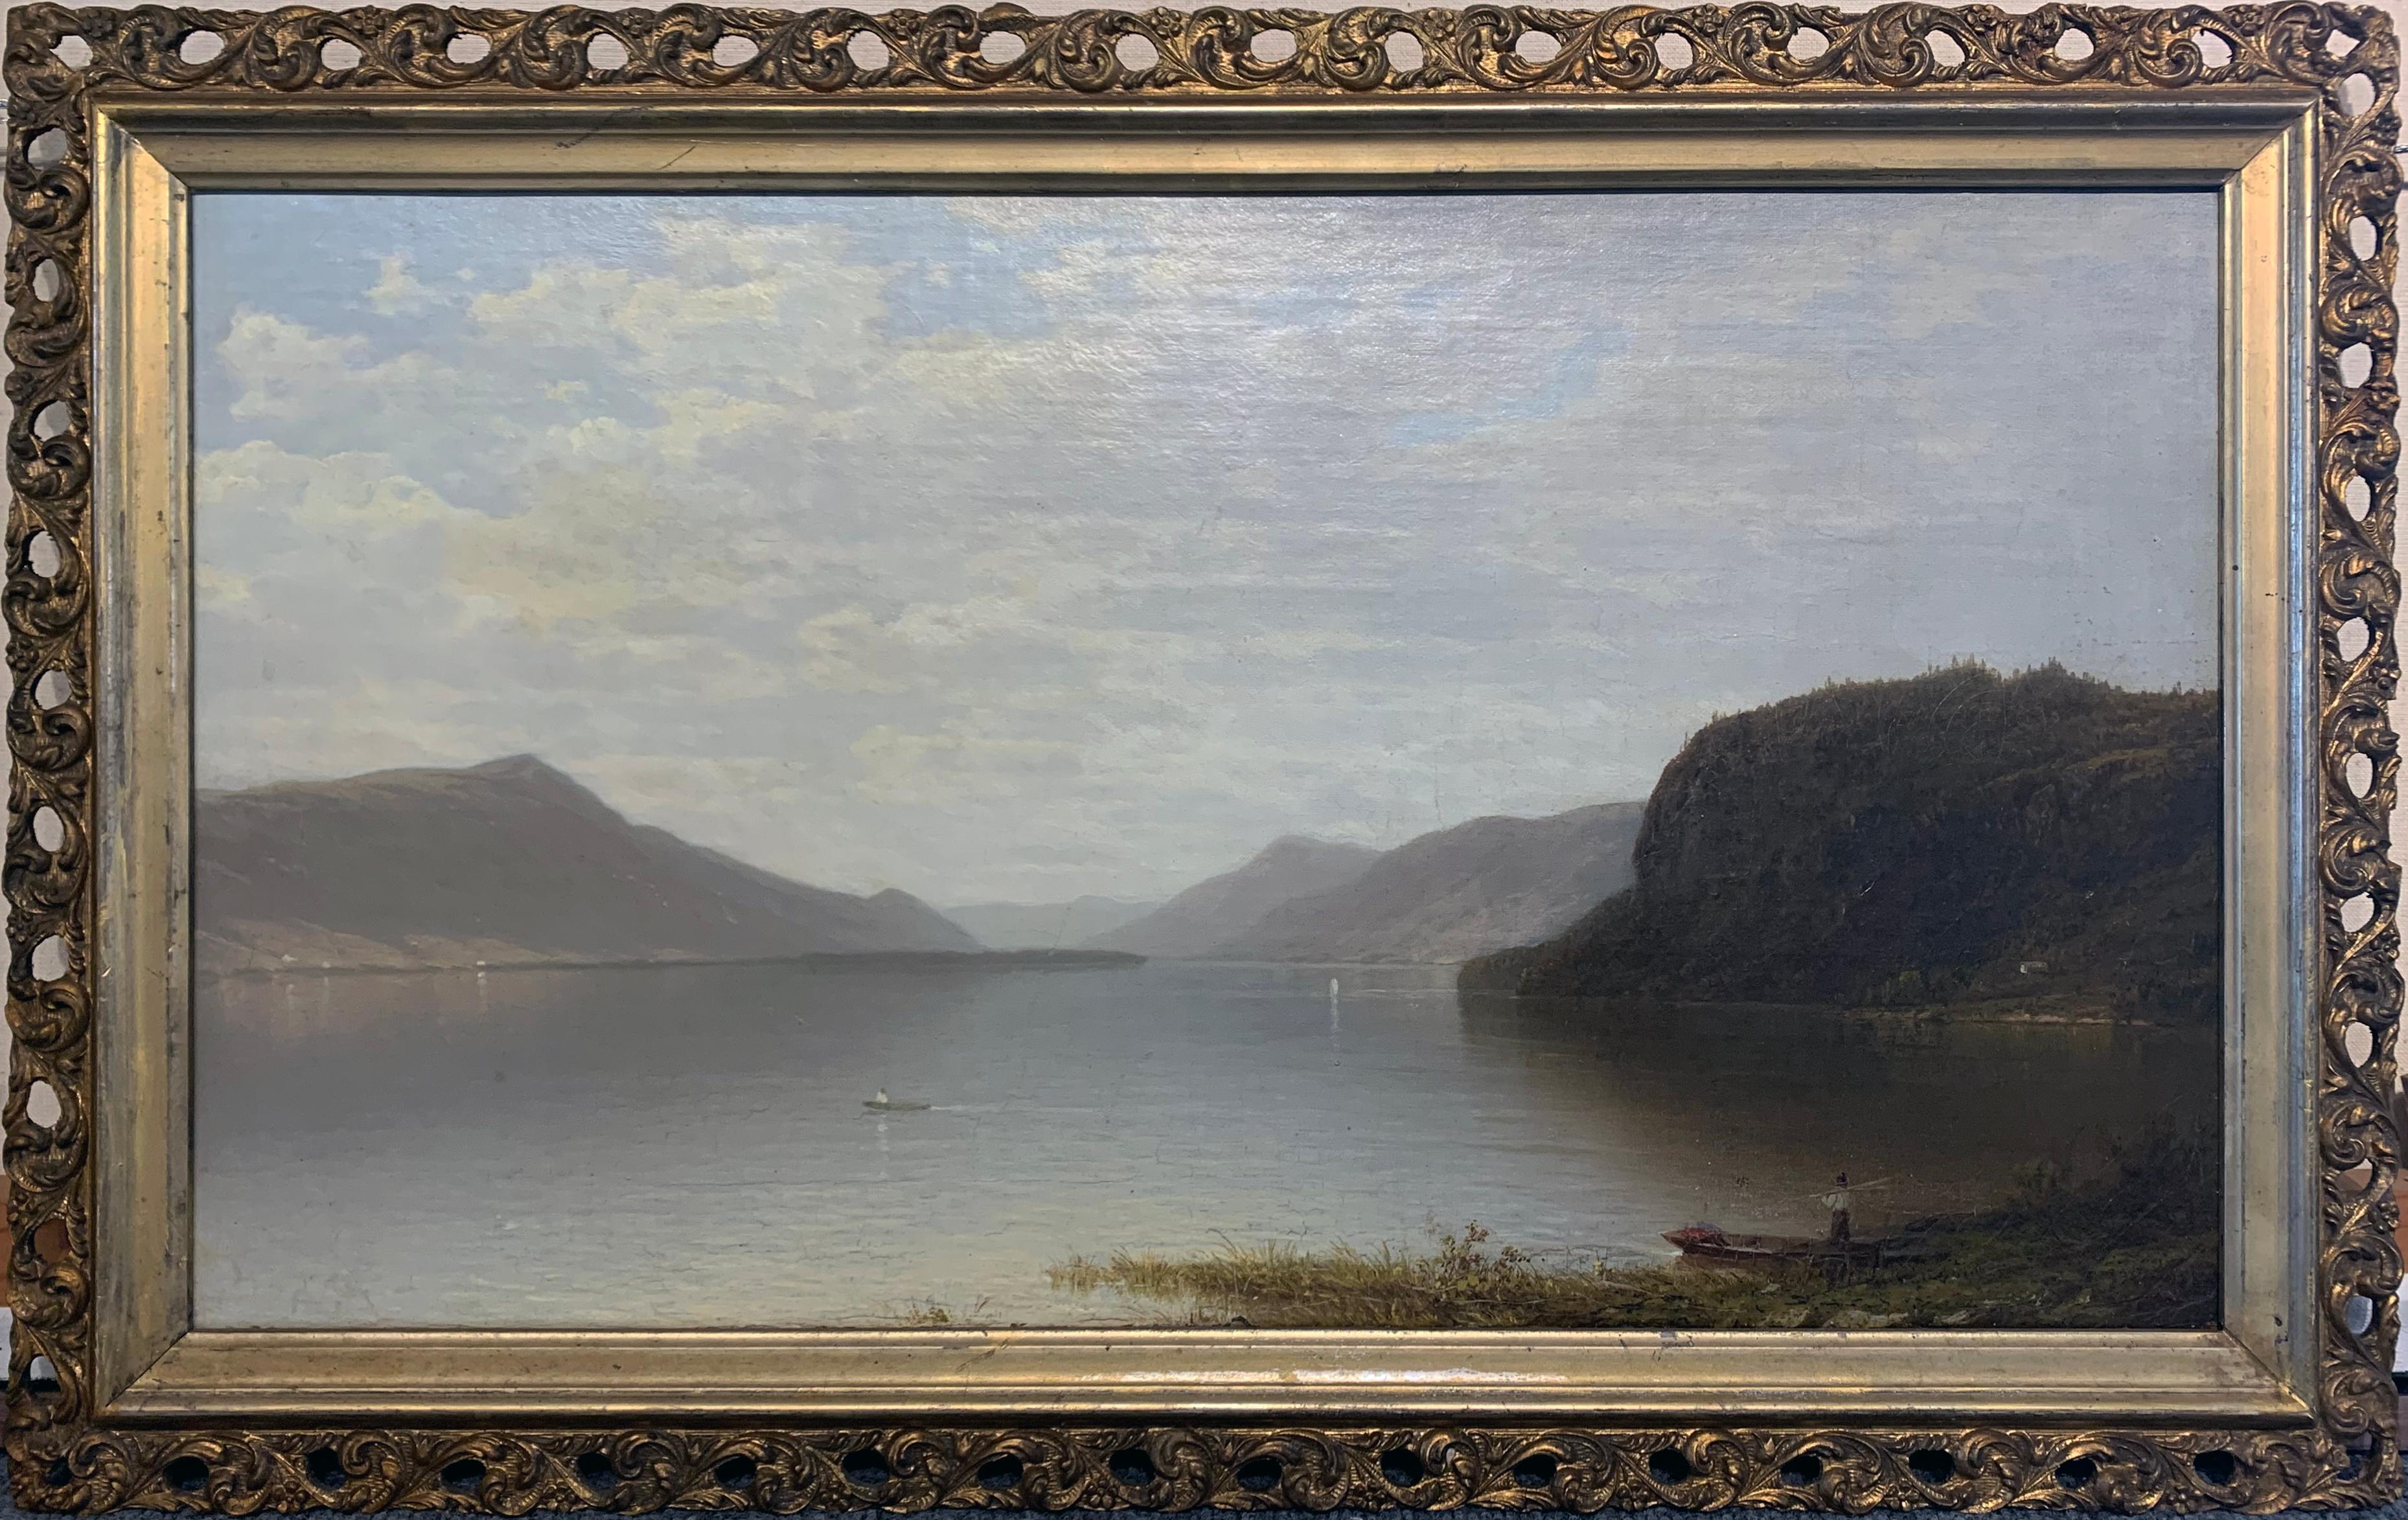 John Frederick Kensett Landscape Painting - Hudson River Landscape with Fishing Boats and Figures, Framed Oil on Canvas